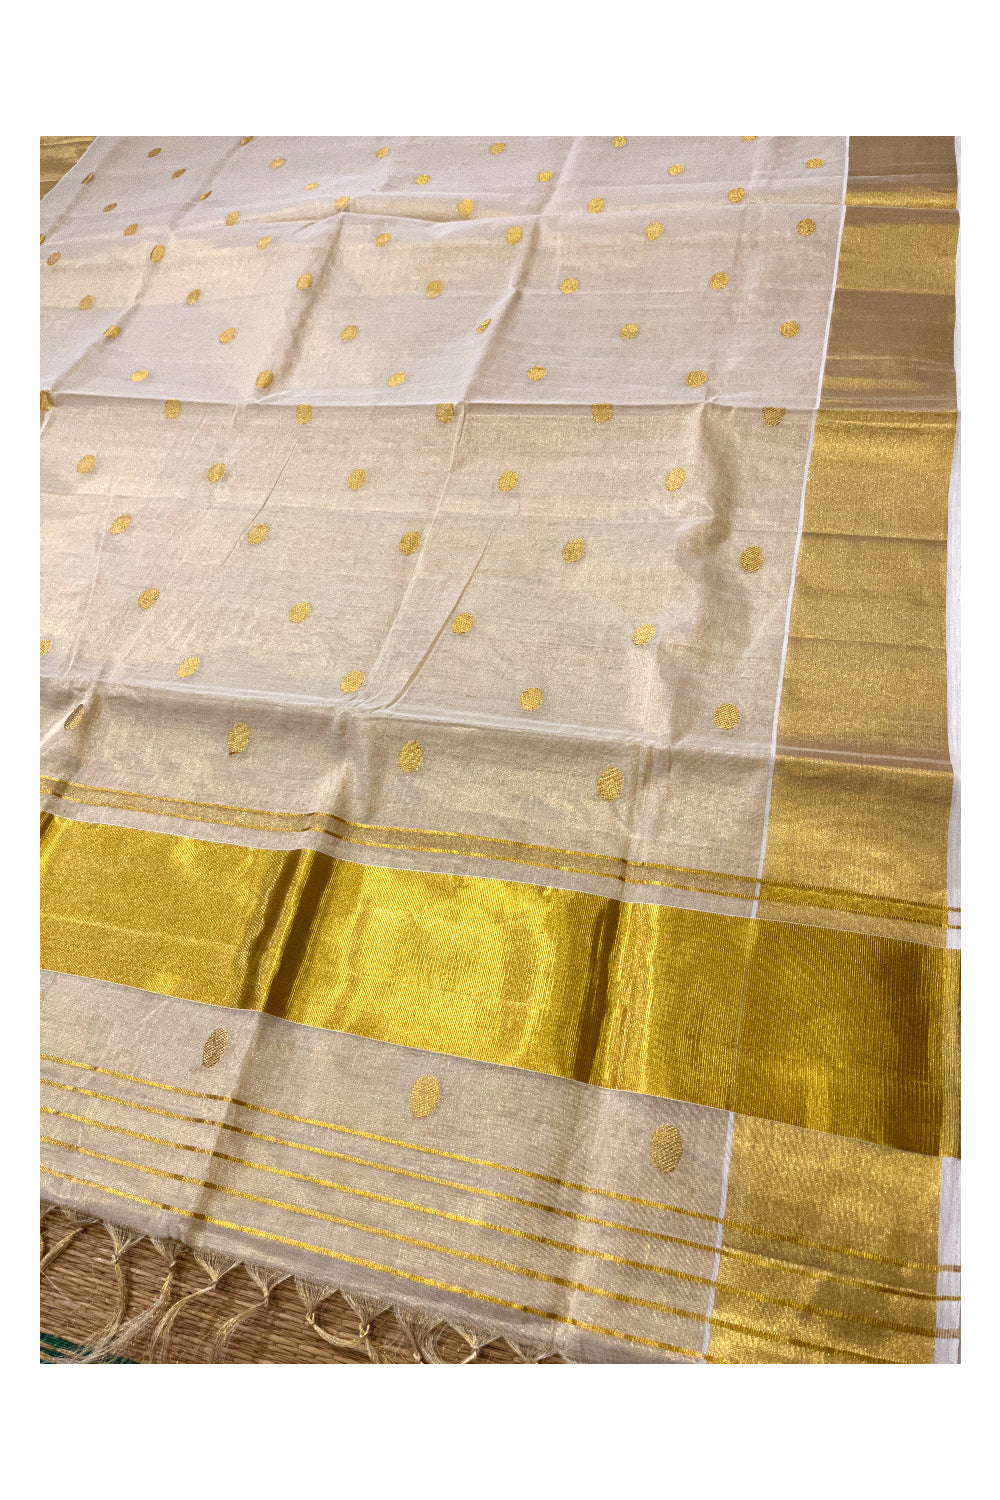 Southloom Premium Handloom Tissue Saree with Golden Polka Work Across Body